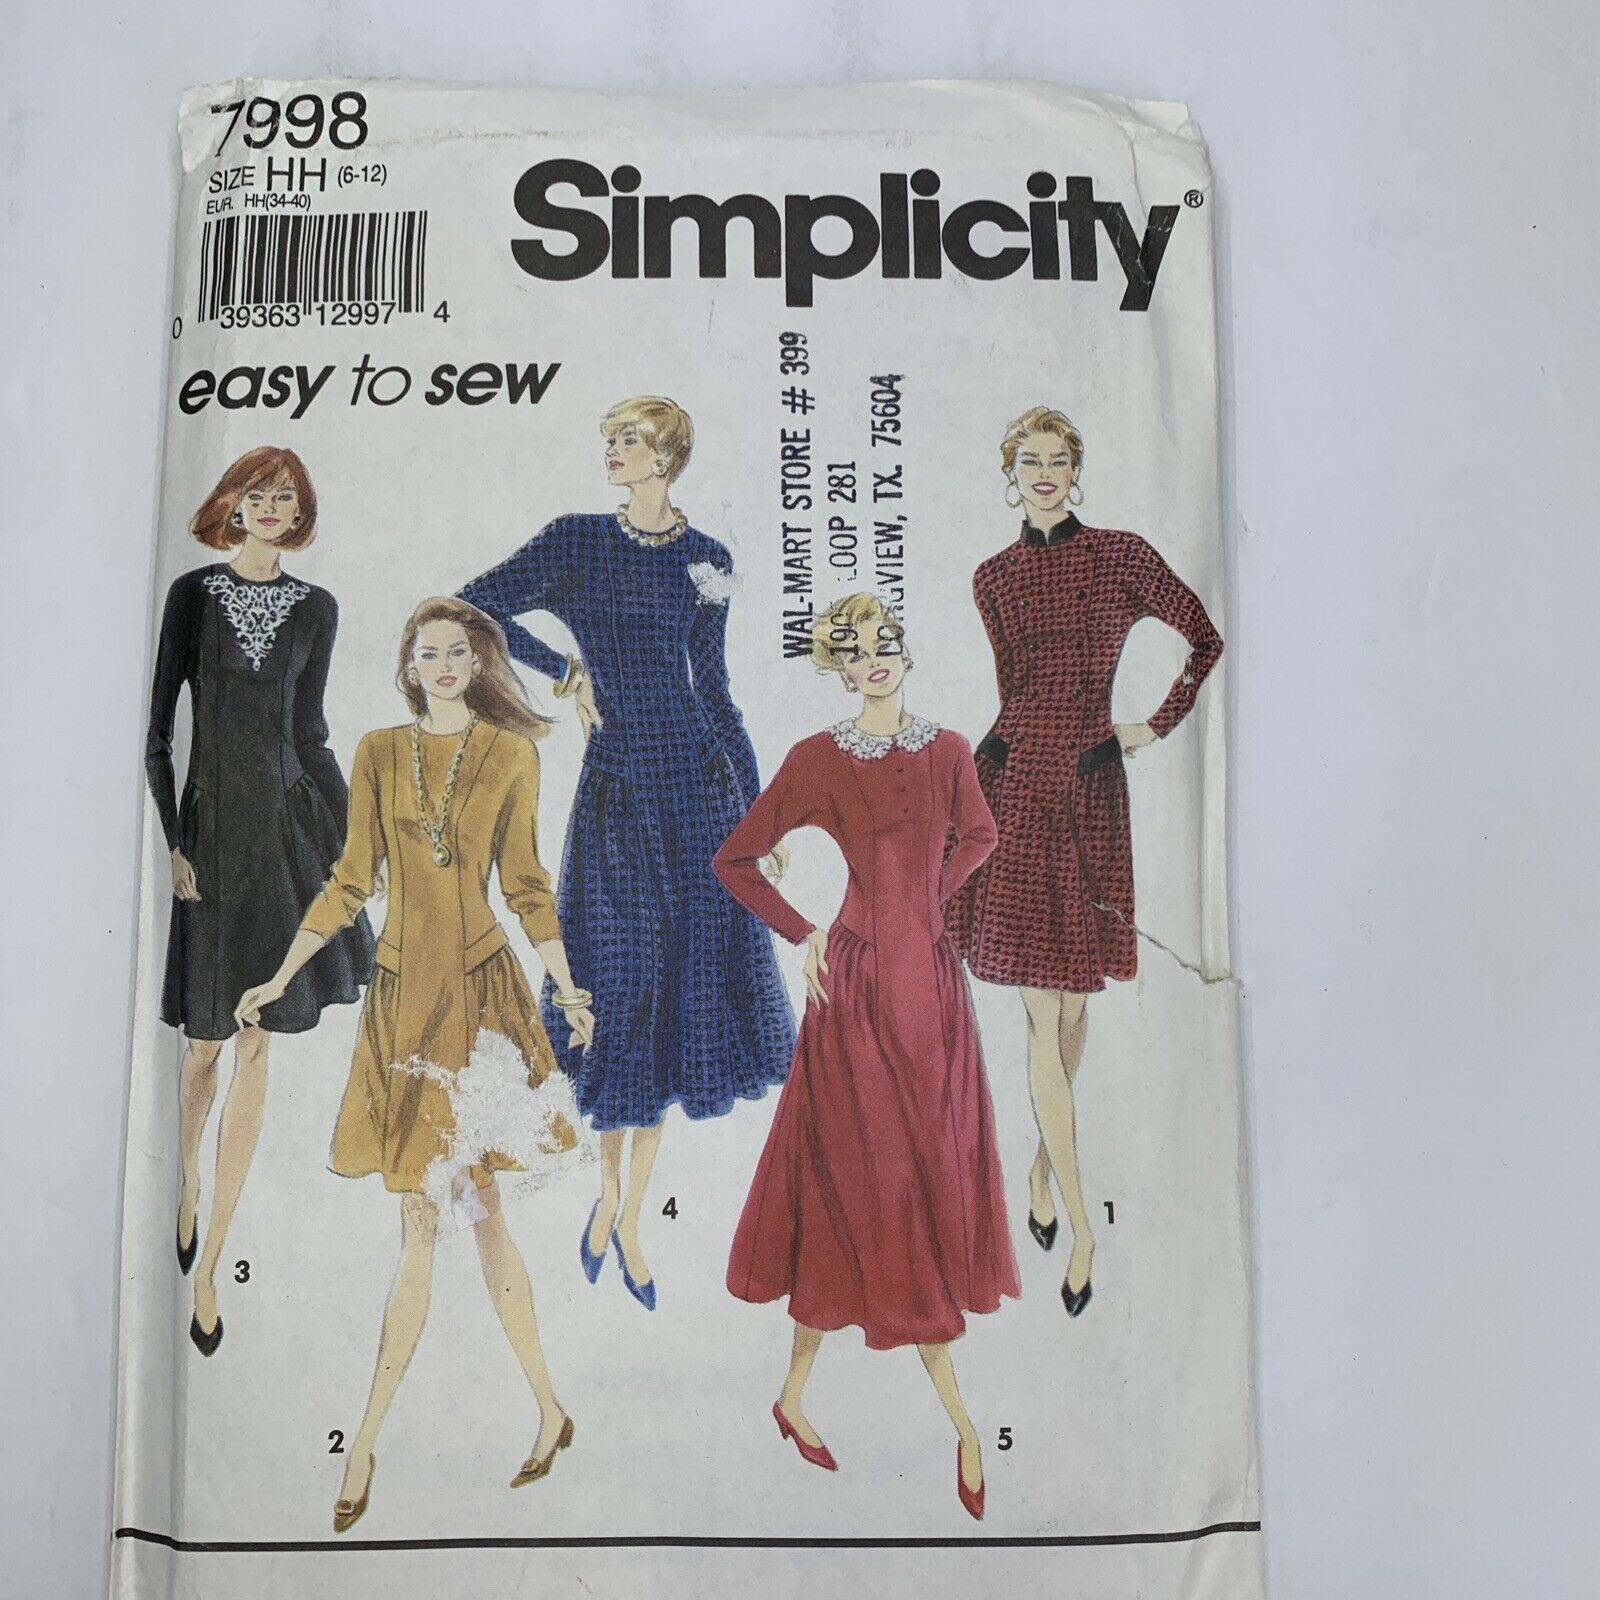 Simplicity 7998 Dress With Princess Seams Sewing Pattern 6-12 